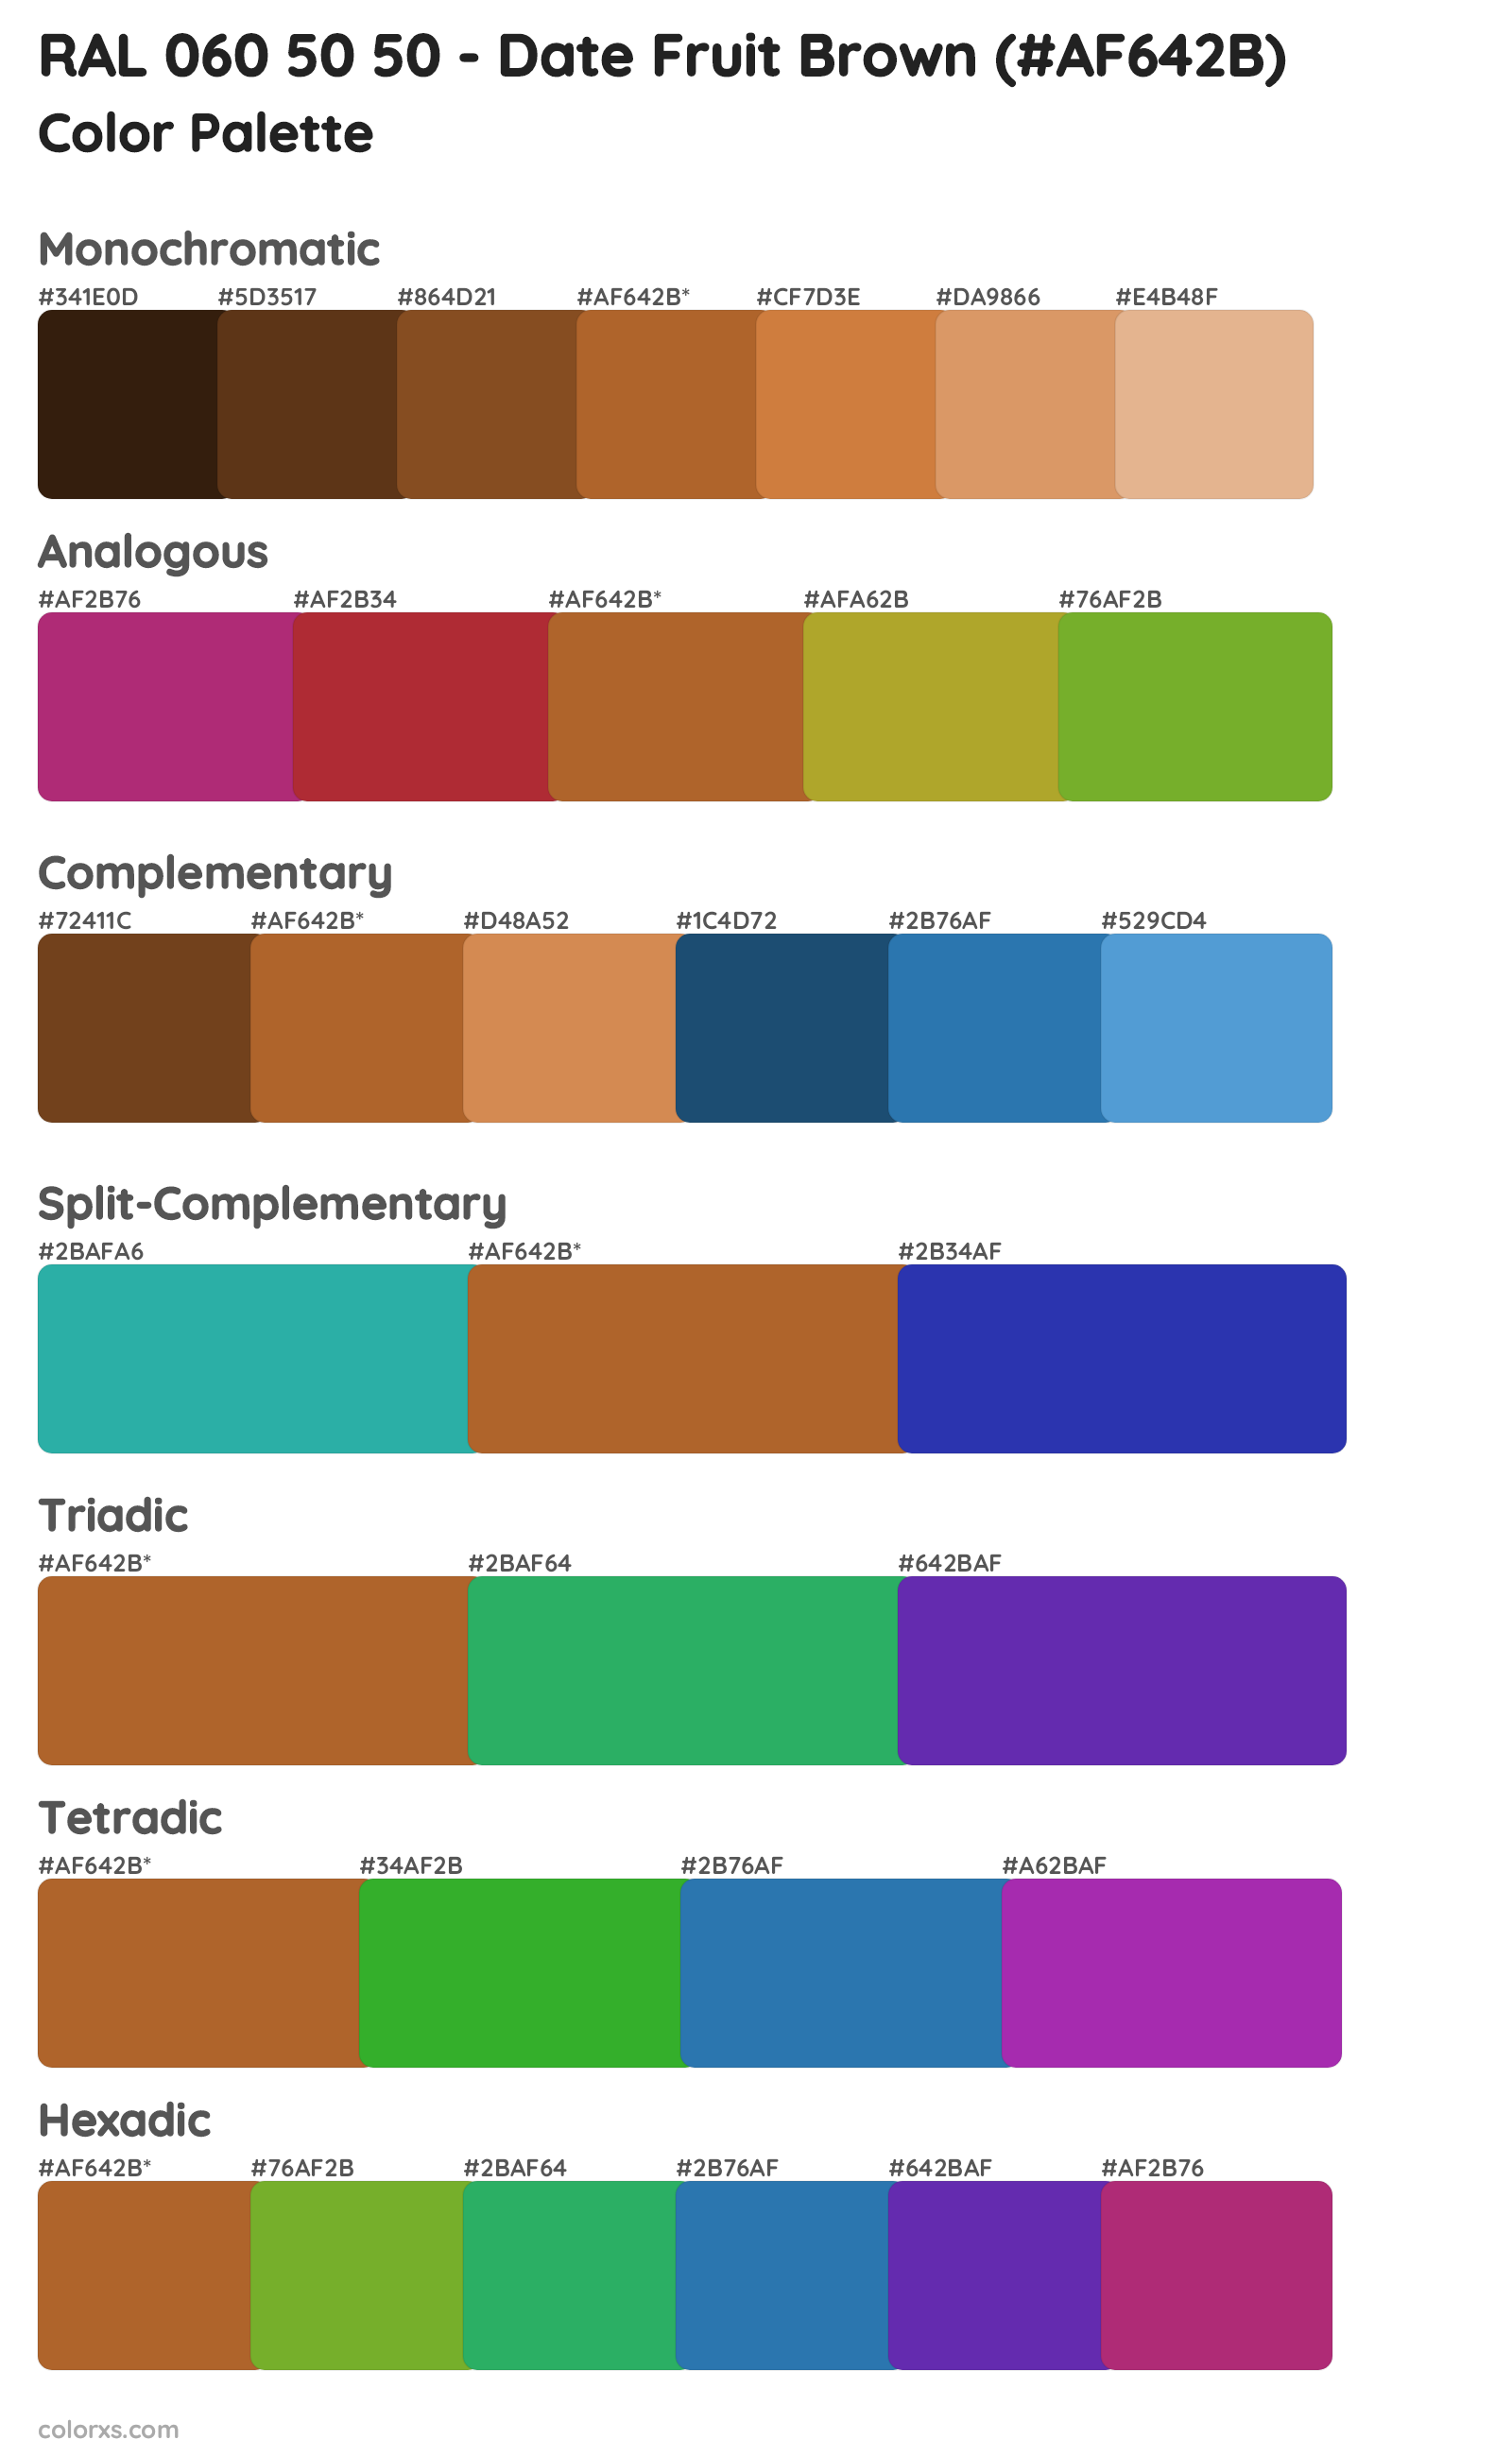 RAL 060 50 50 - Date Fruit Brown Color Scheme Palettes